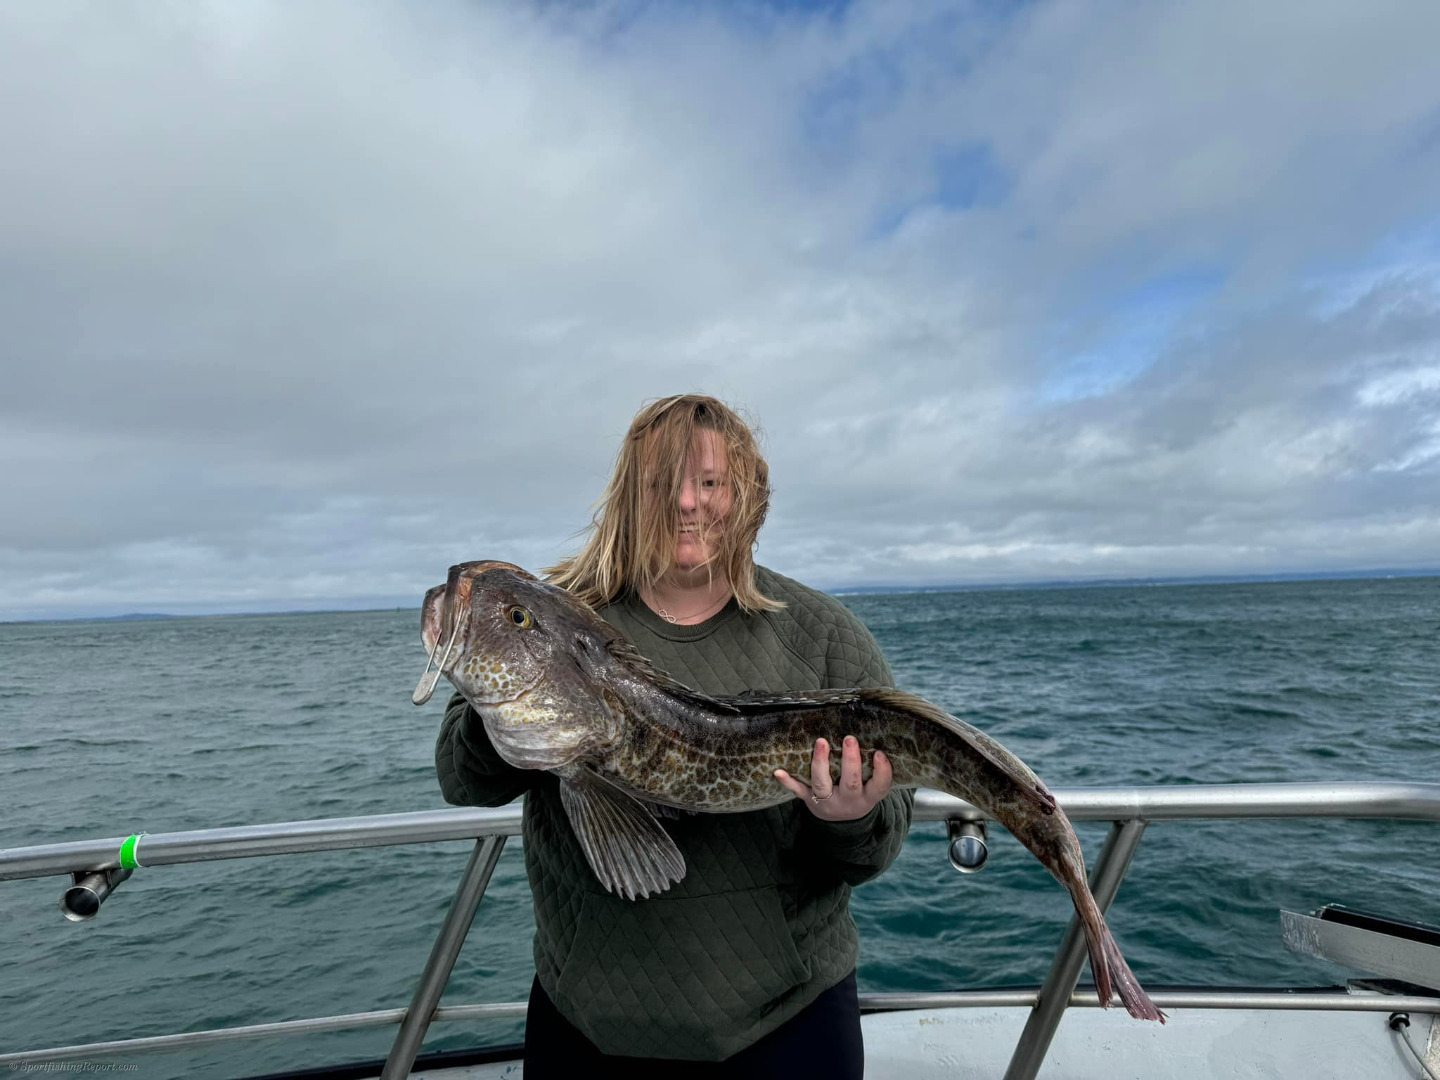 12 fishing caught limits of yellowtail, rockfish and limits of lingcod